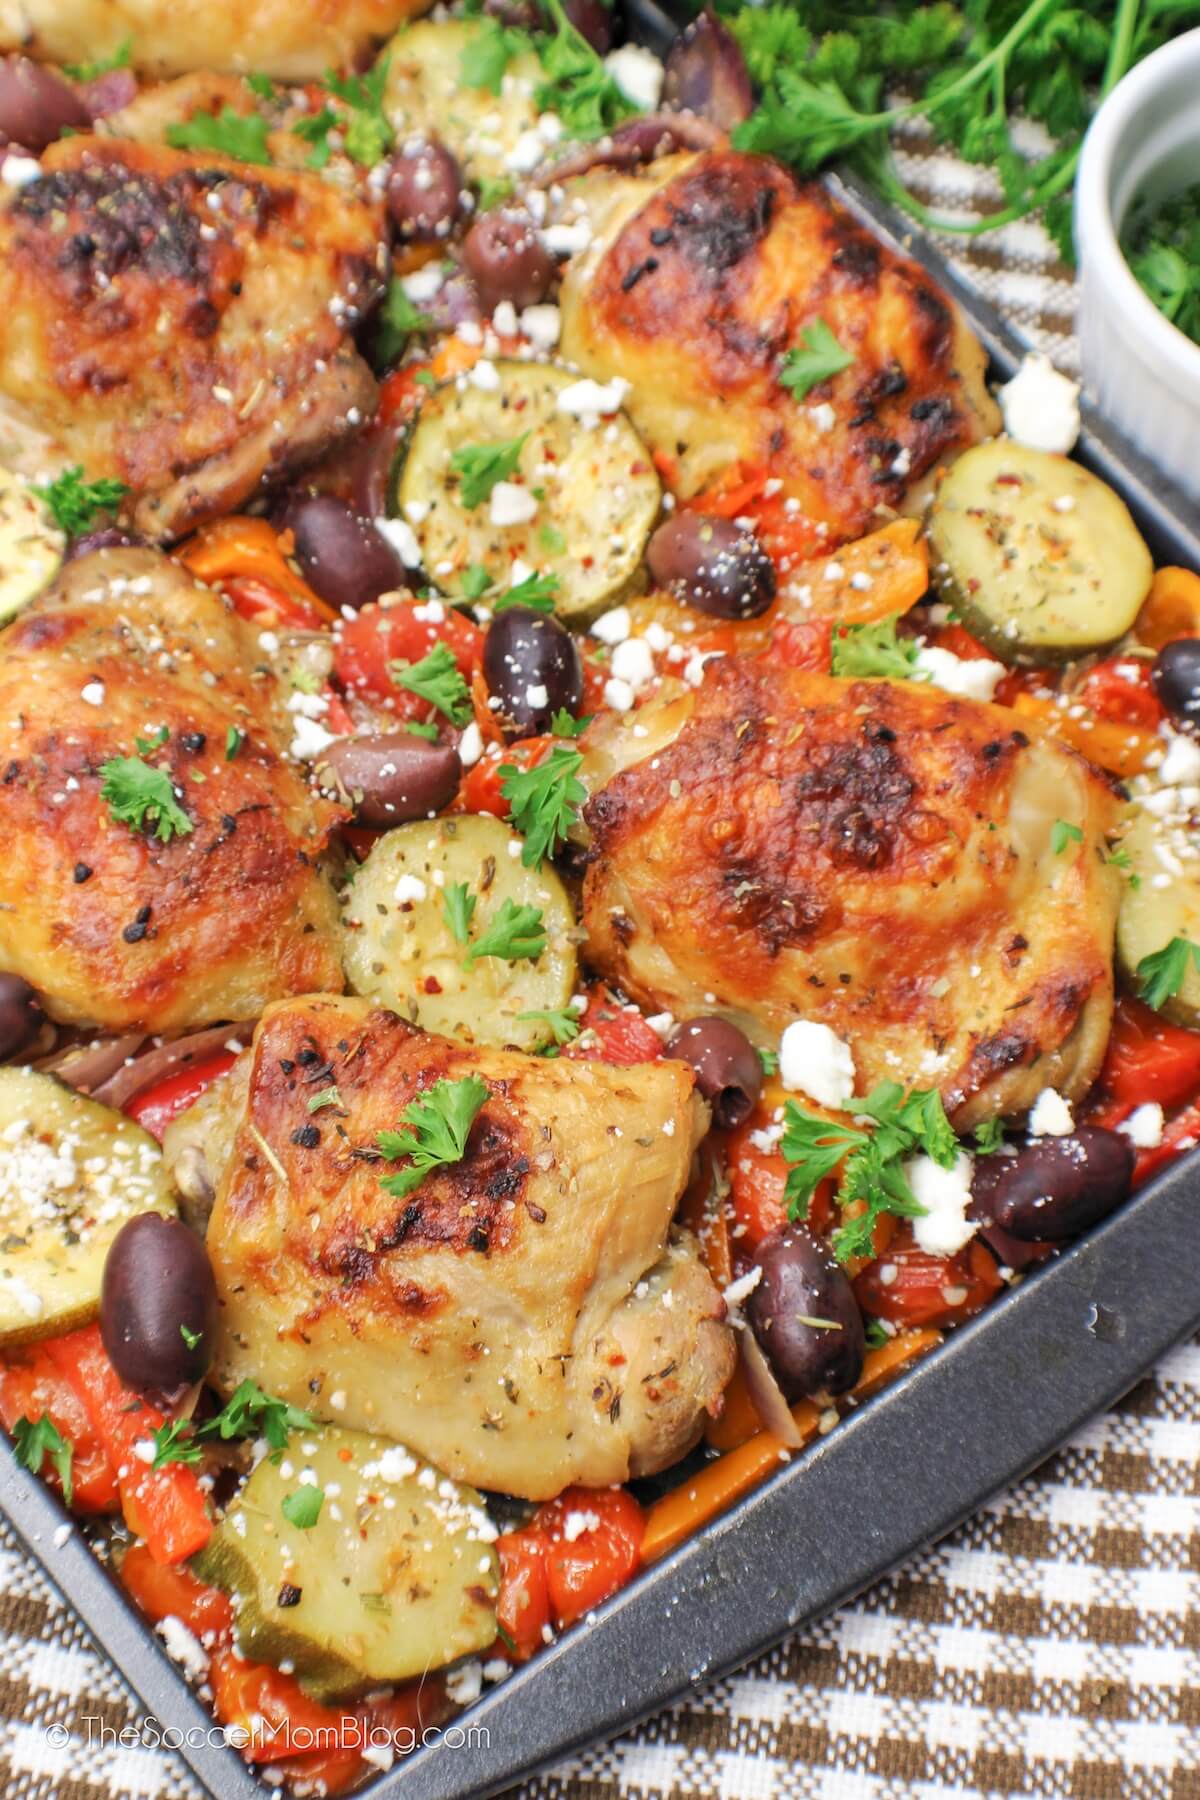 Greek chicken sheet pan dinner with roasted veggies